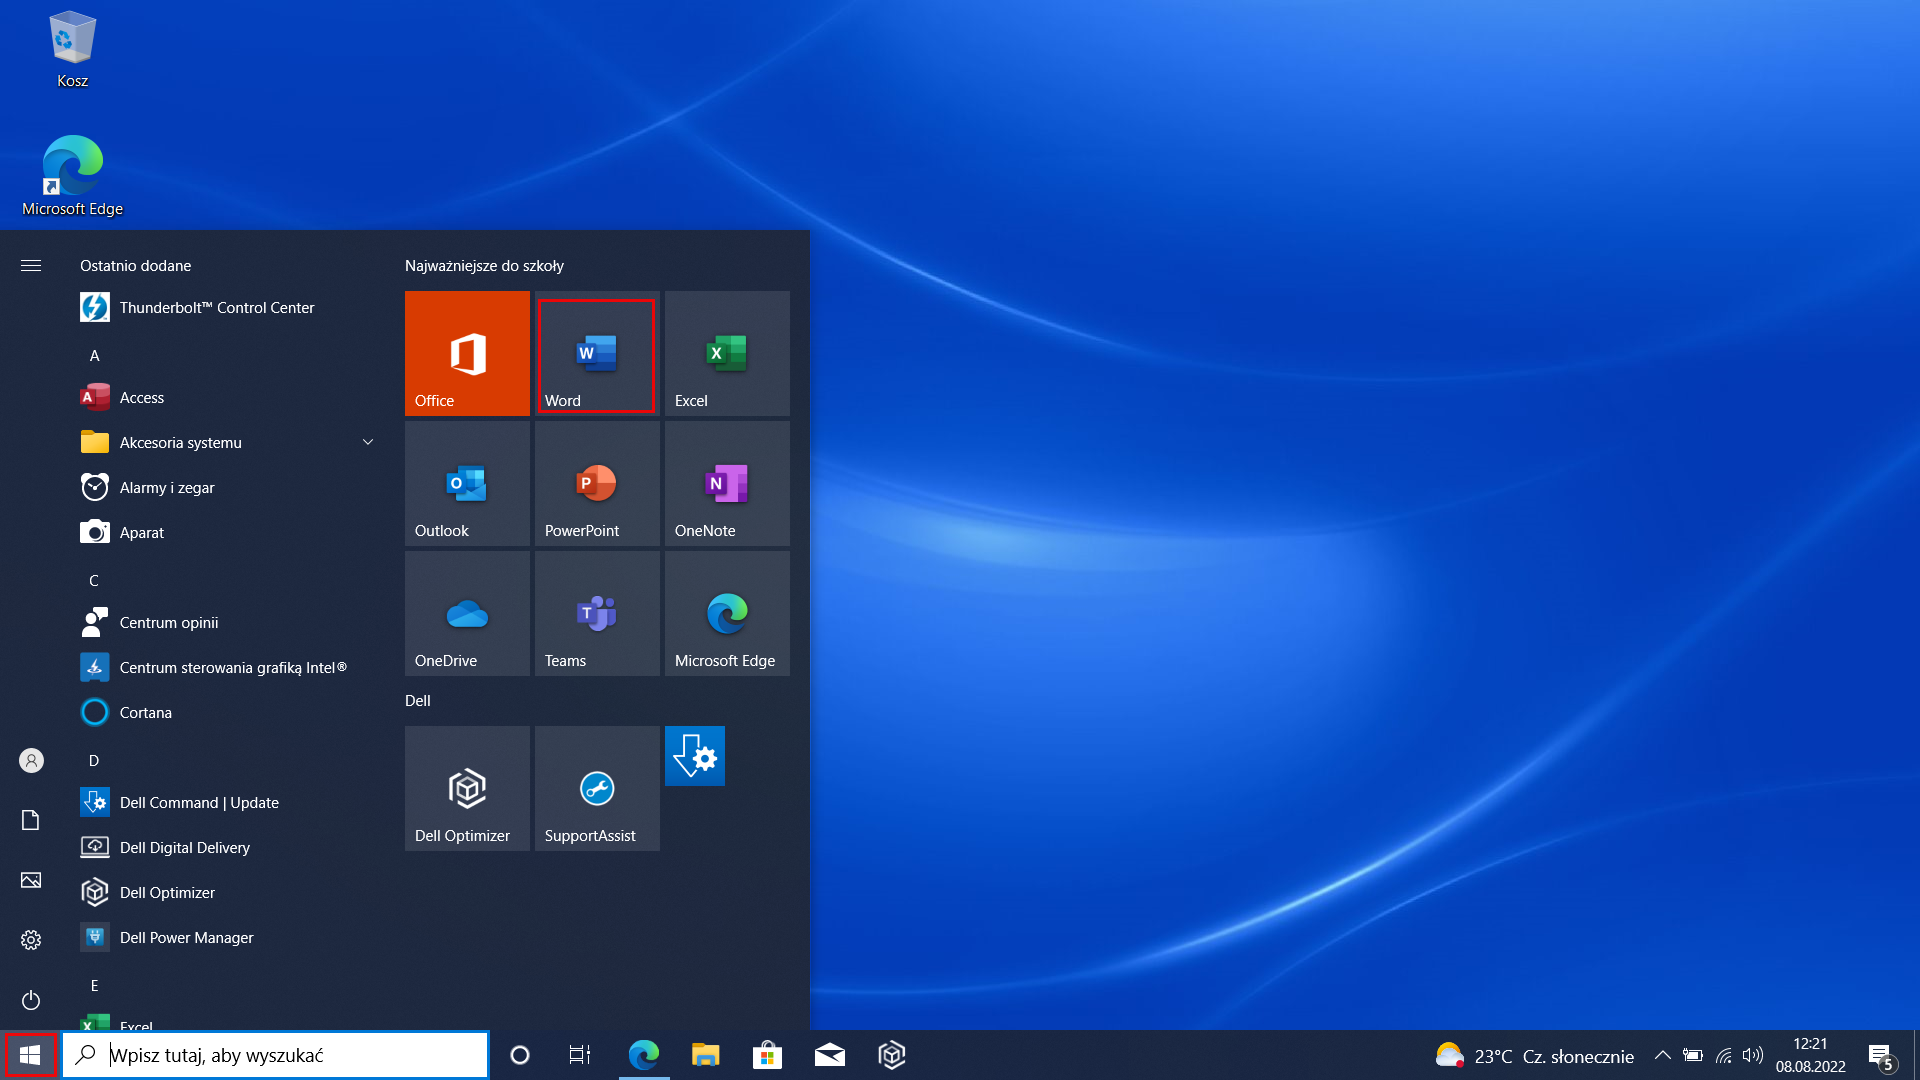 Instalacja Windowsa 10 oraz pakietu office 2021 na Laptopach DELL Latitude